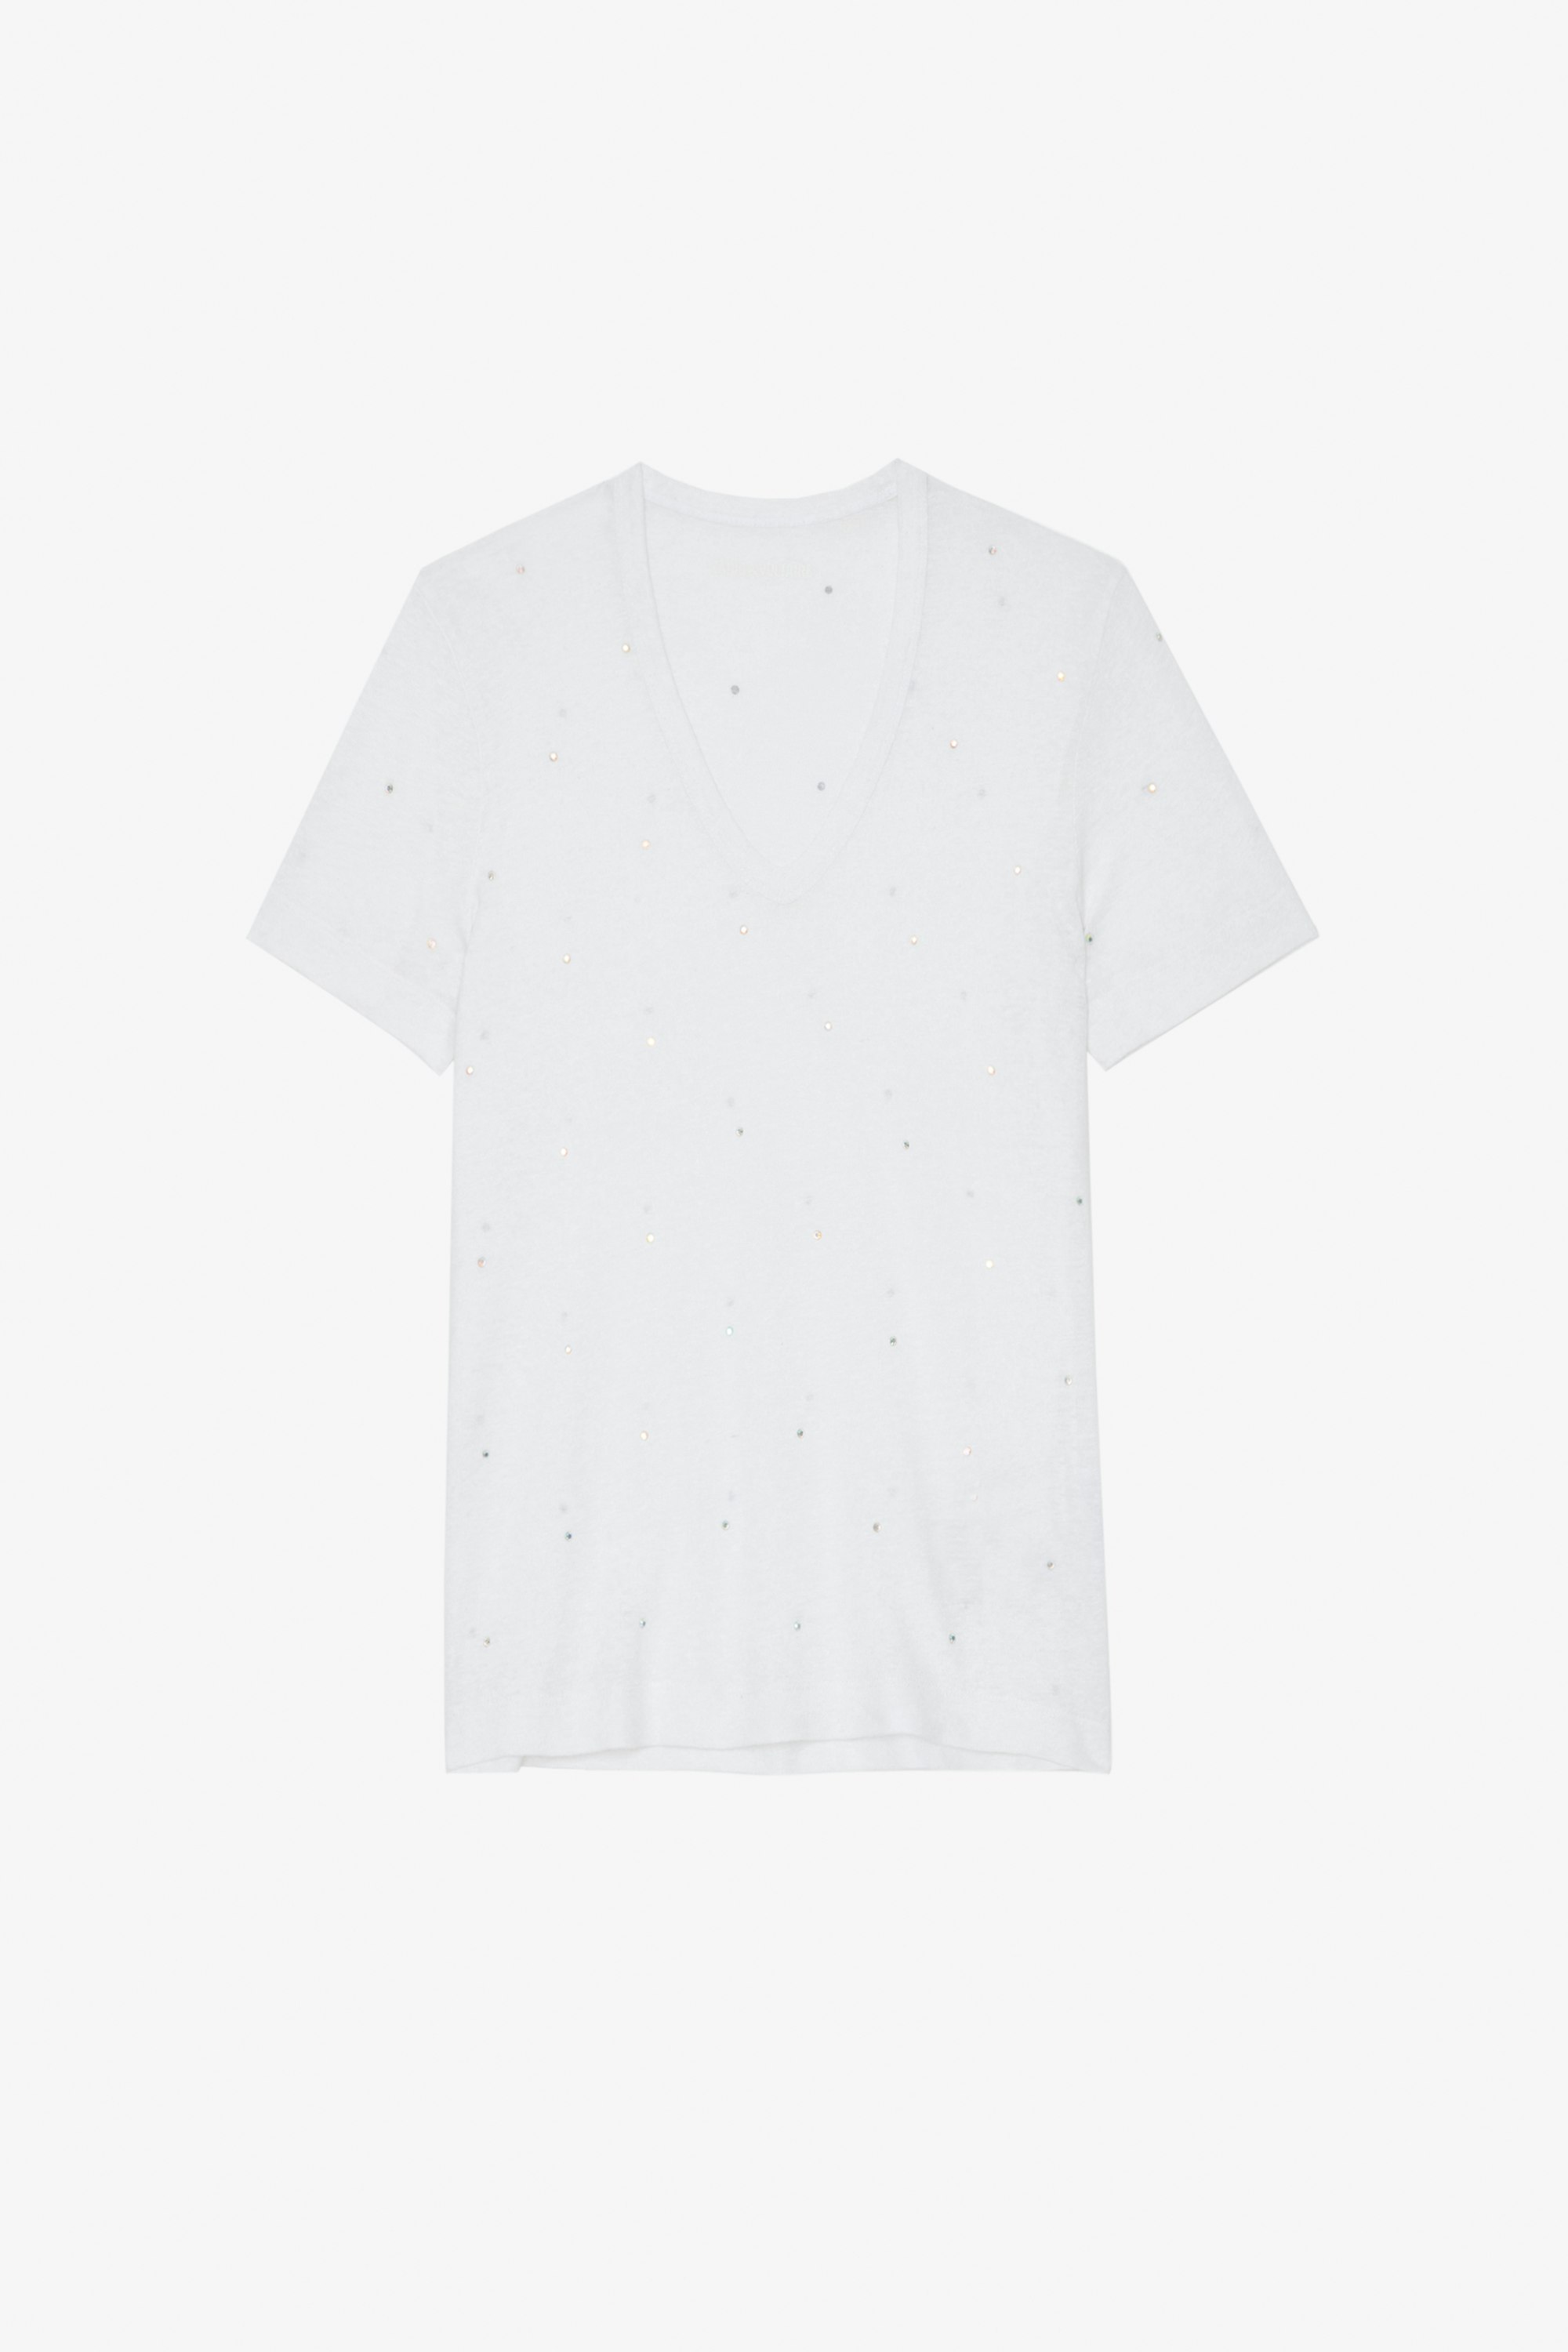 Camiseta Wassa Camiseta color blanco con strass Mujer